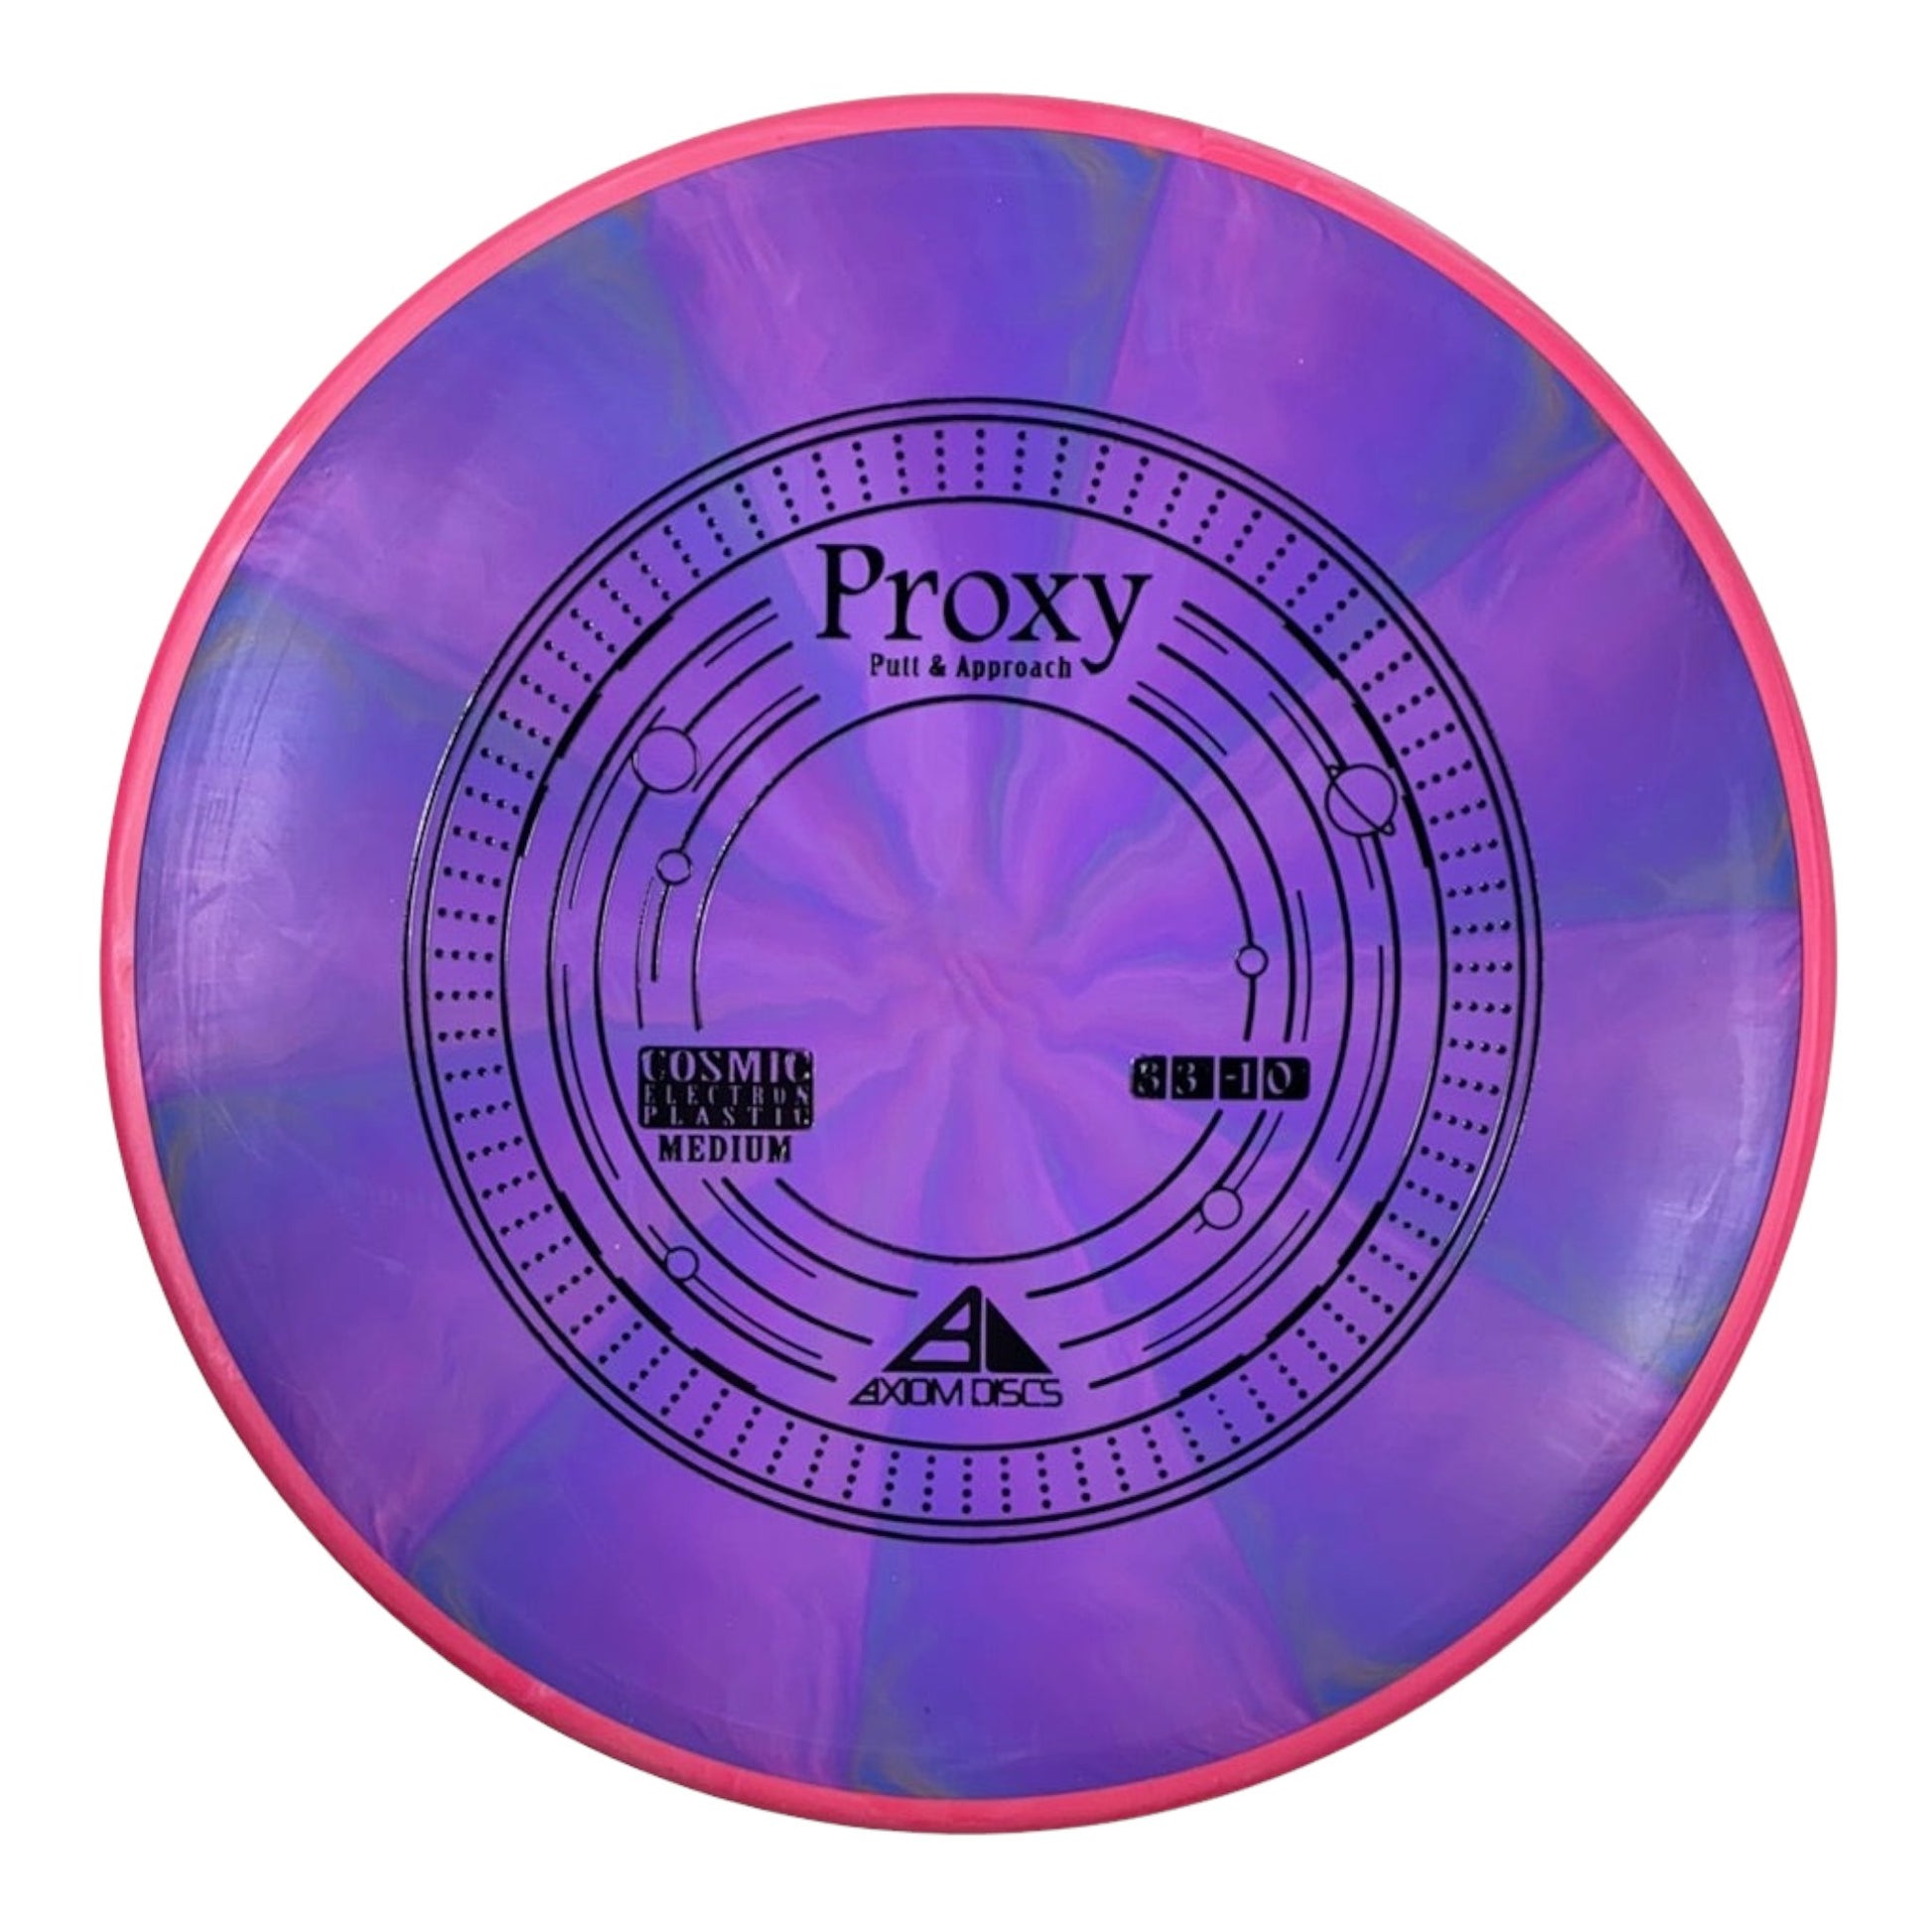 Axiom Discs Proxy | Cosmic Electron Medium | Purple/Pink 168g